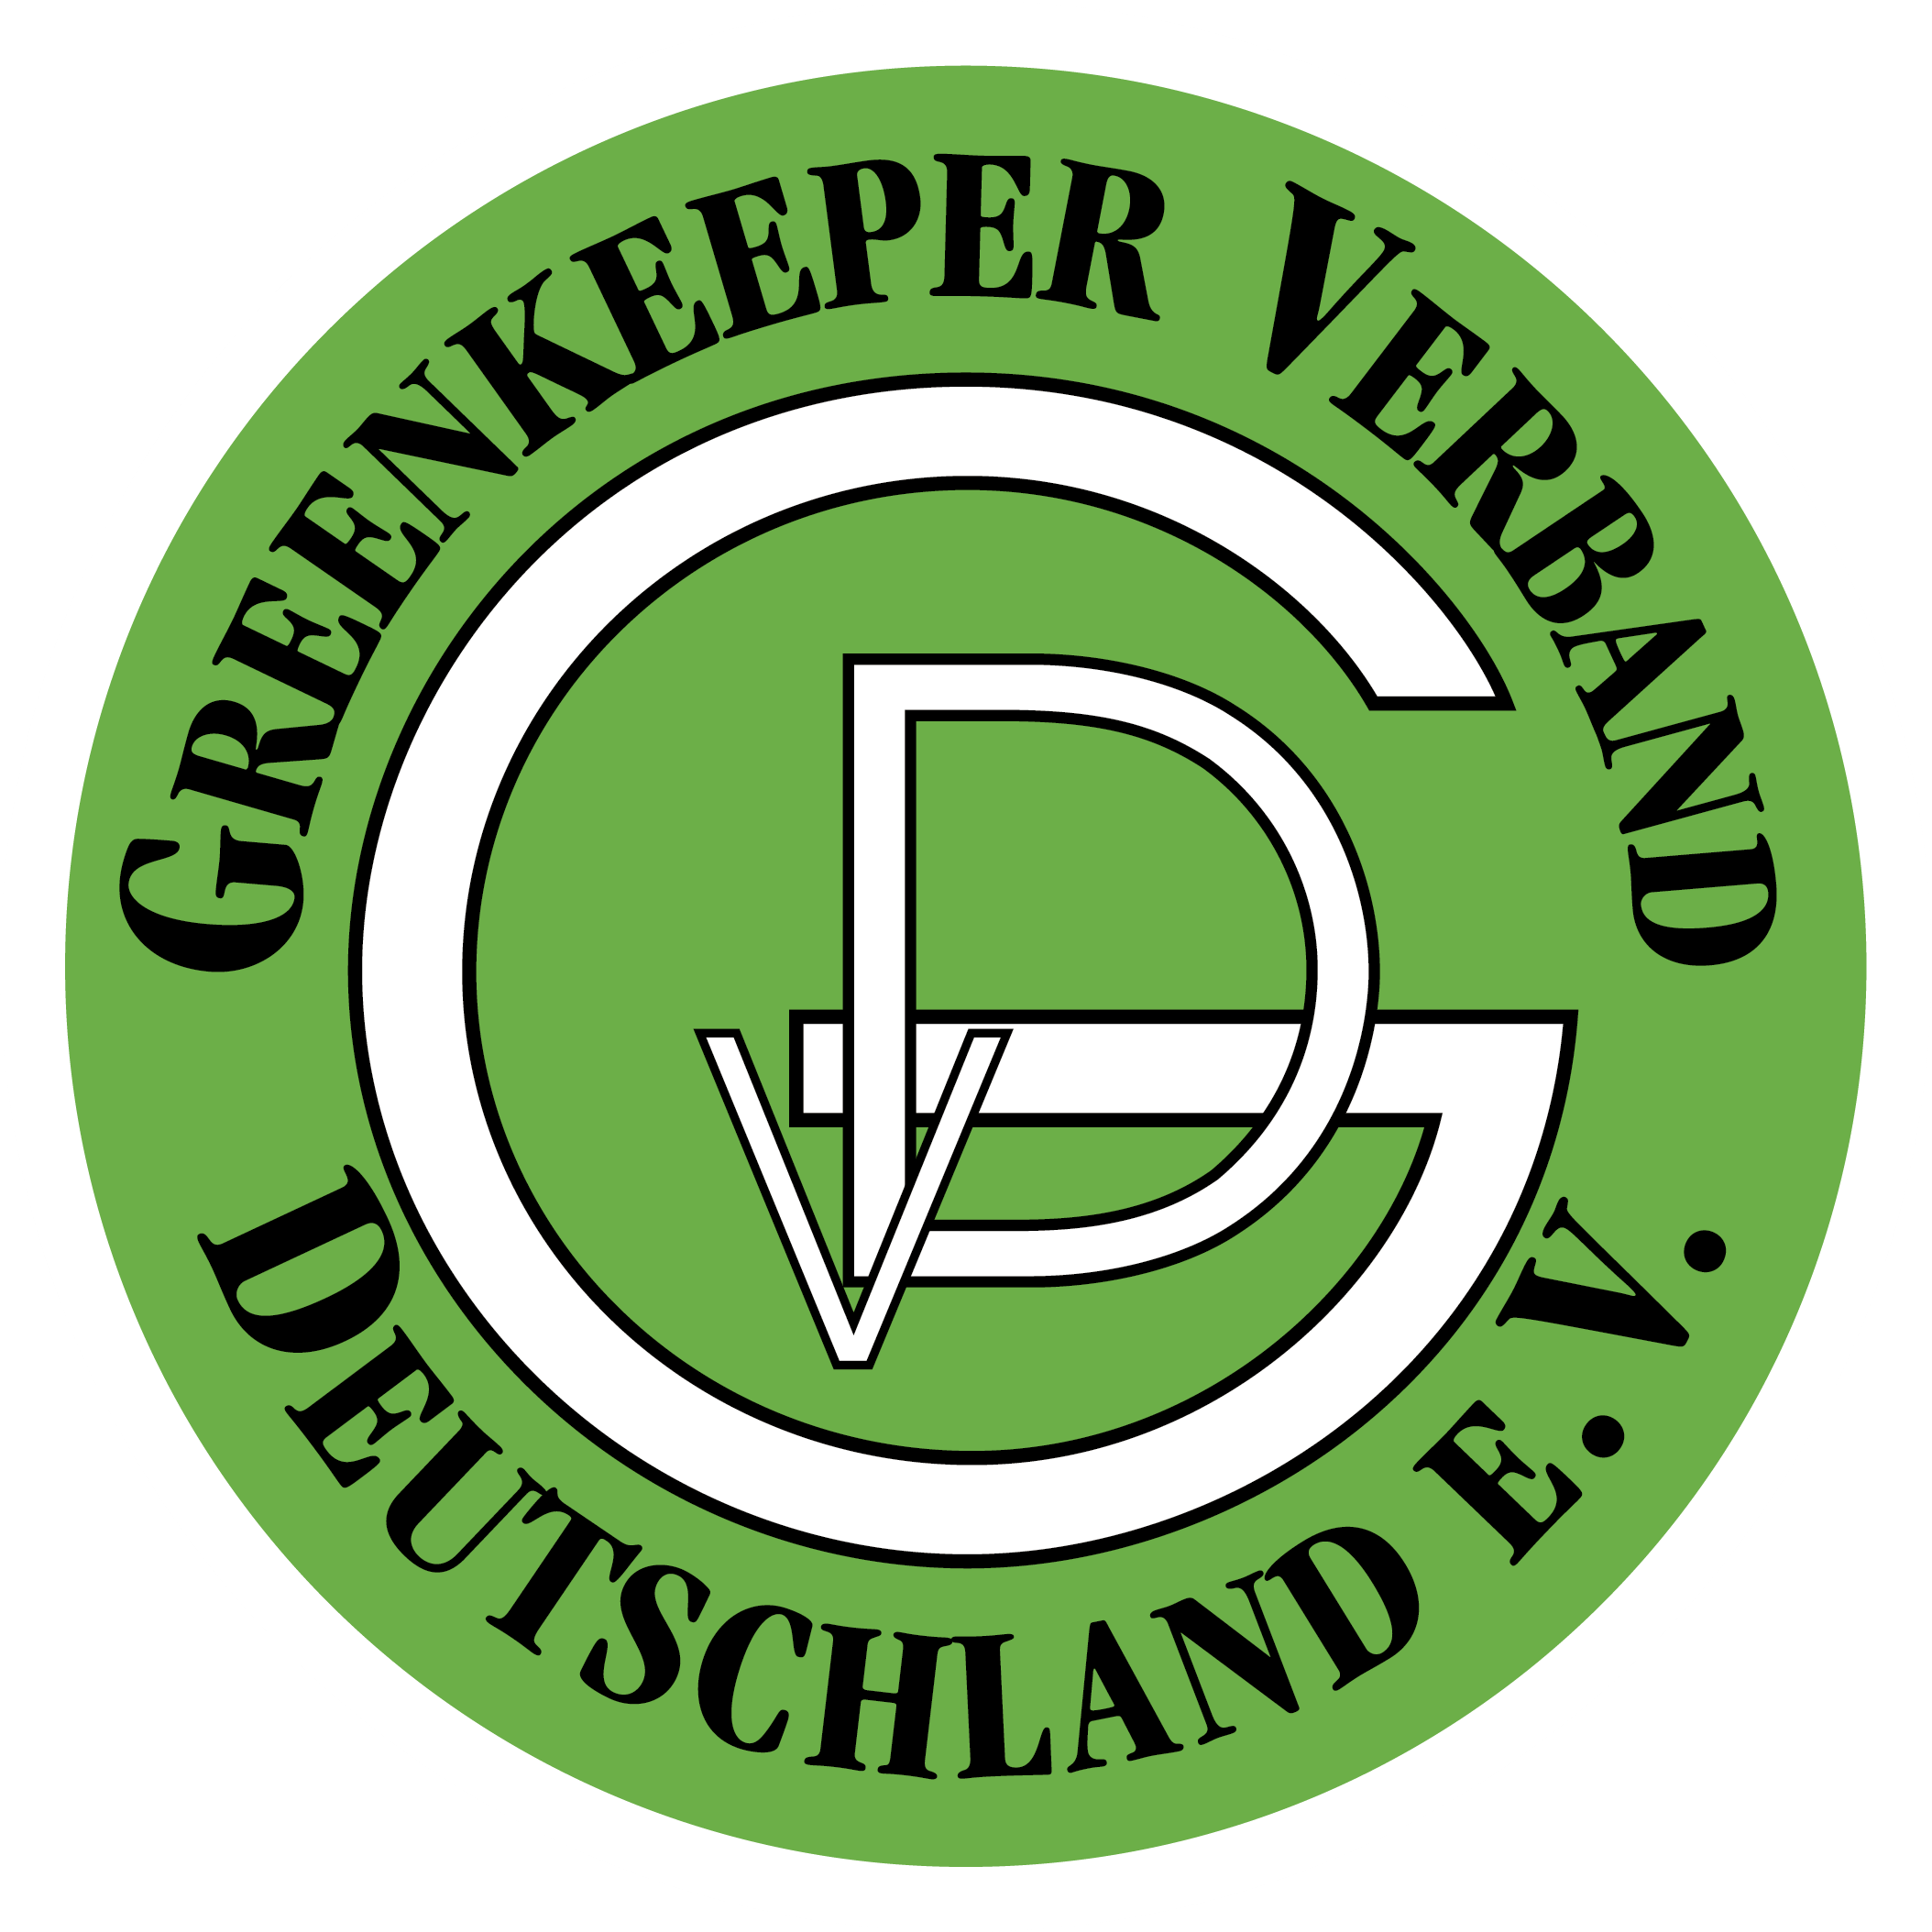 Greenkeeper Verband Deutschland e. V.